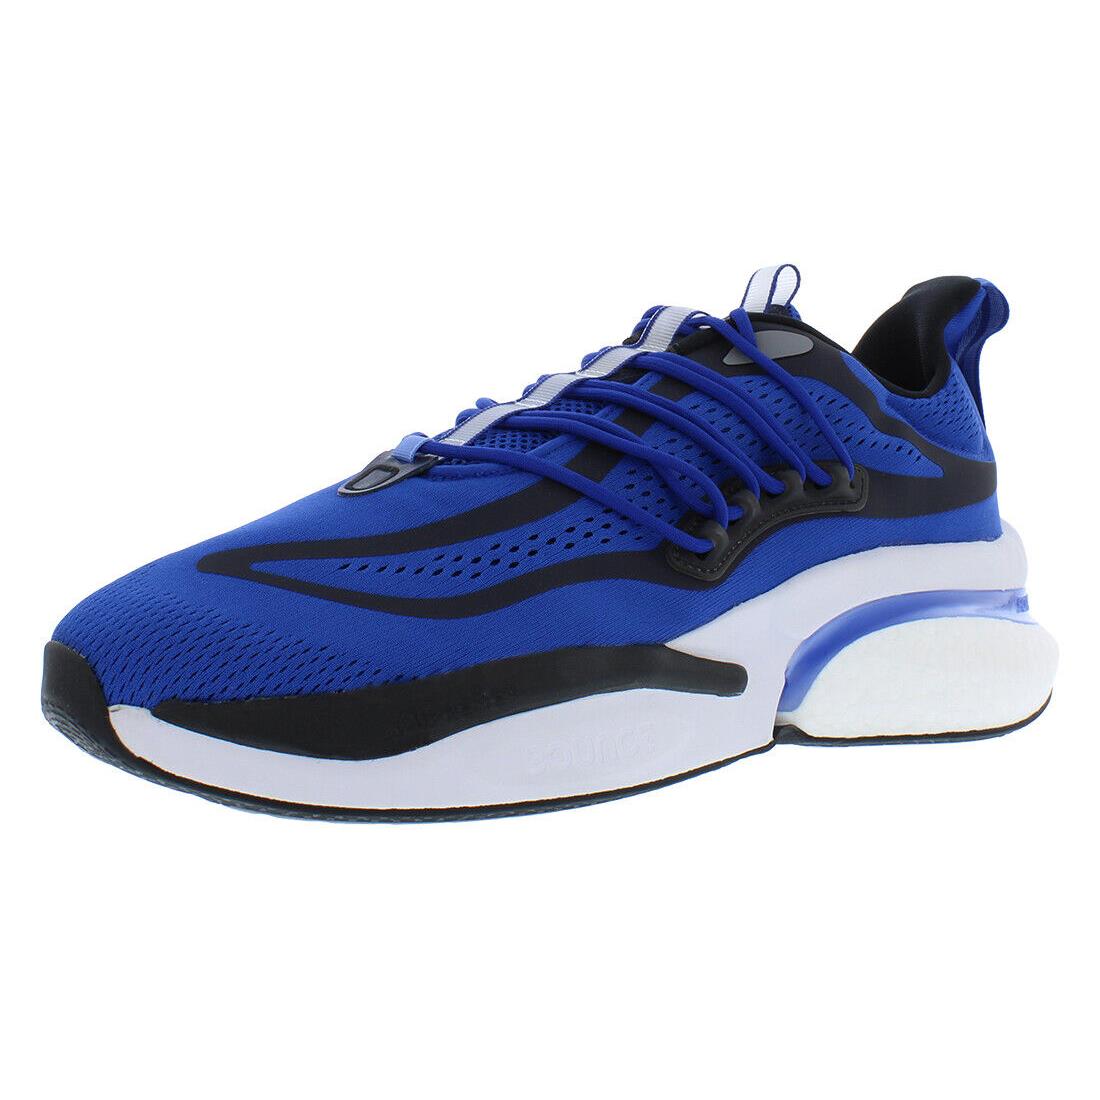 Adidas Alphaboost V1 Mens Shoes Size 12.5 Color: Royal Blue/blue Fusion/grey - Royal Blue/Blue Fusion/Grey Three, Main: Blue